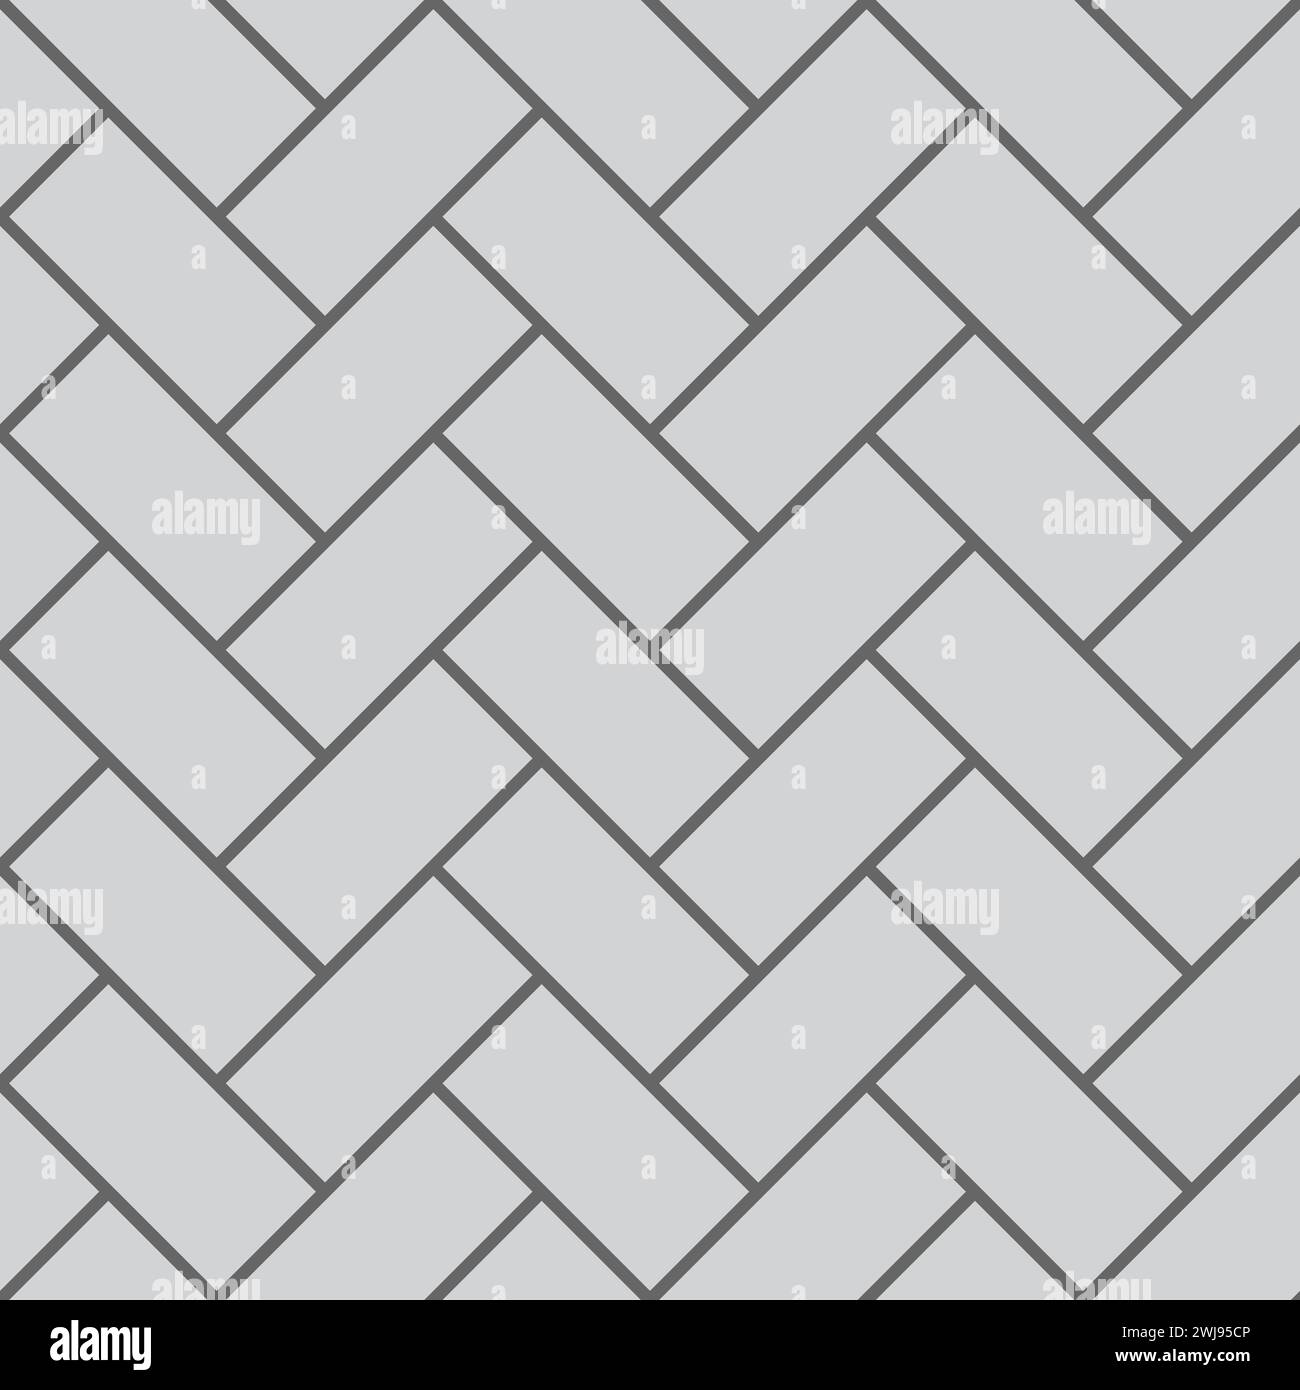 Herring bone cobblestone paving pattern, grey tile. Vector garden or park street or sidewalk flooring, pavement blocks or granite bricks top view Stock Vector